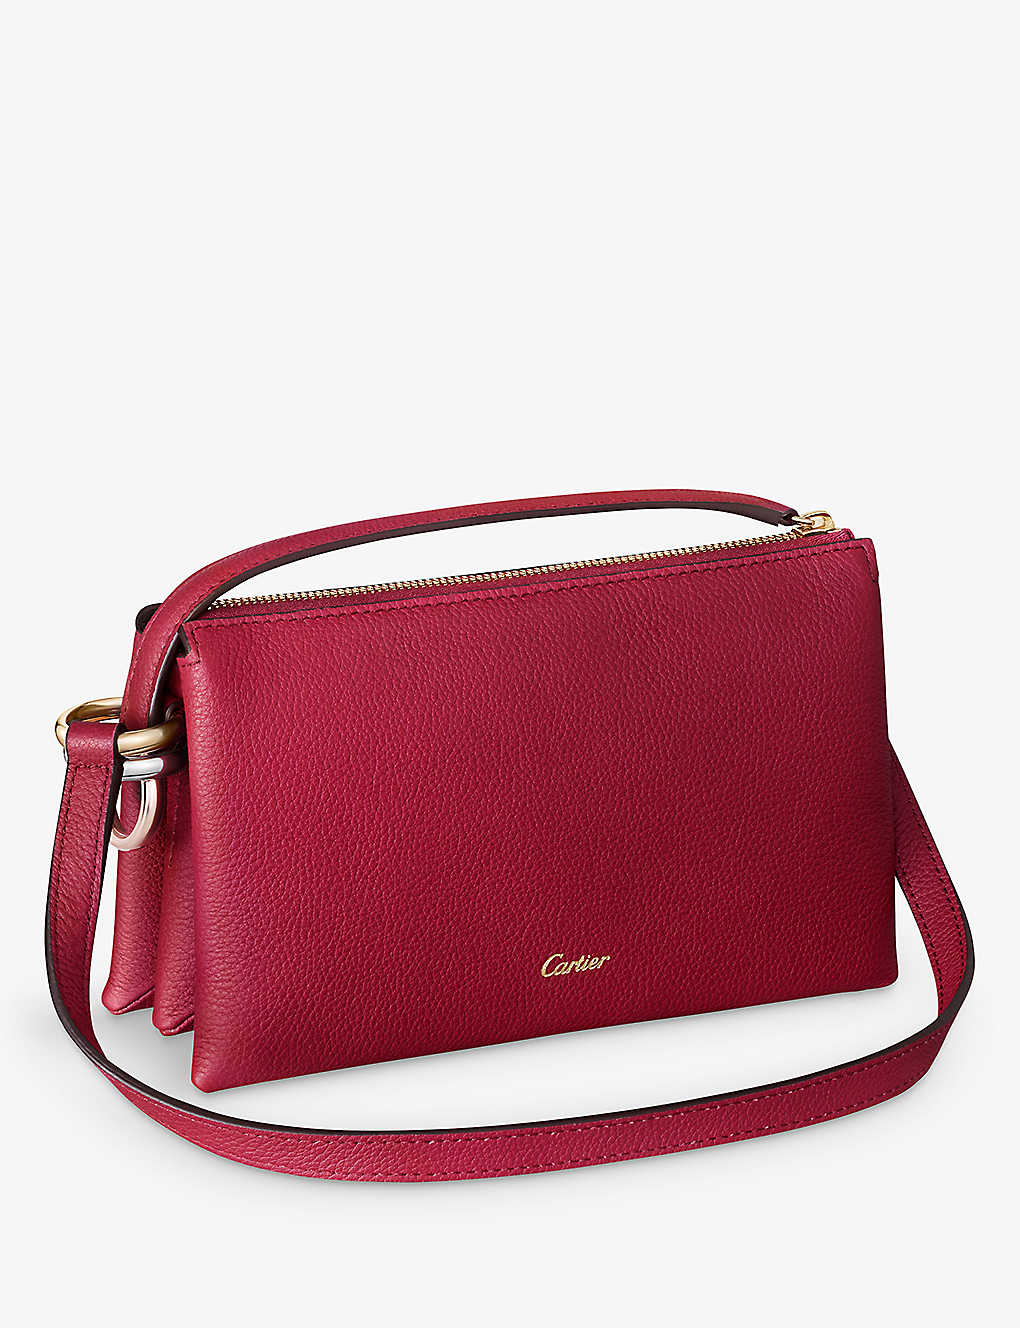 Cartier Womens Ruby Trinity Mini Leather Shoulder Bag